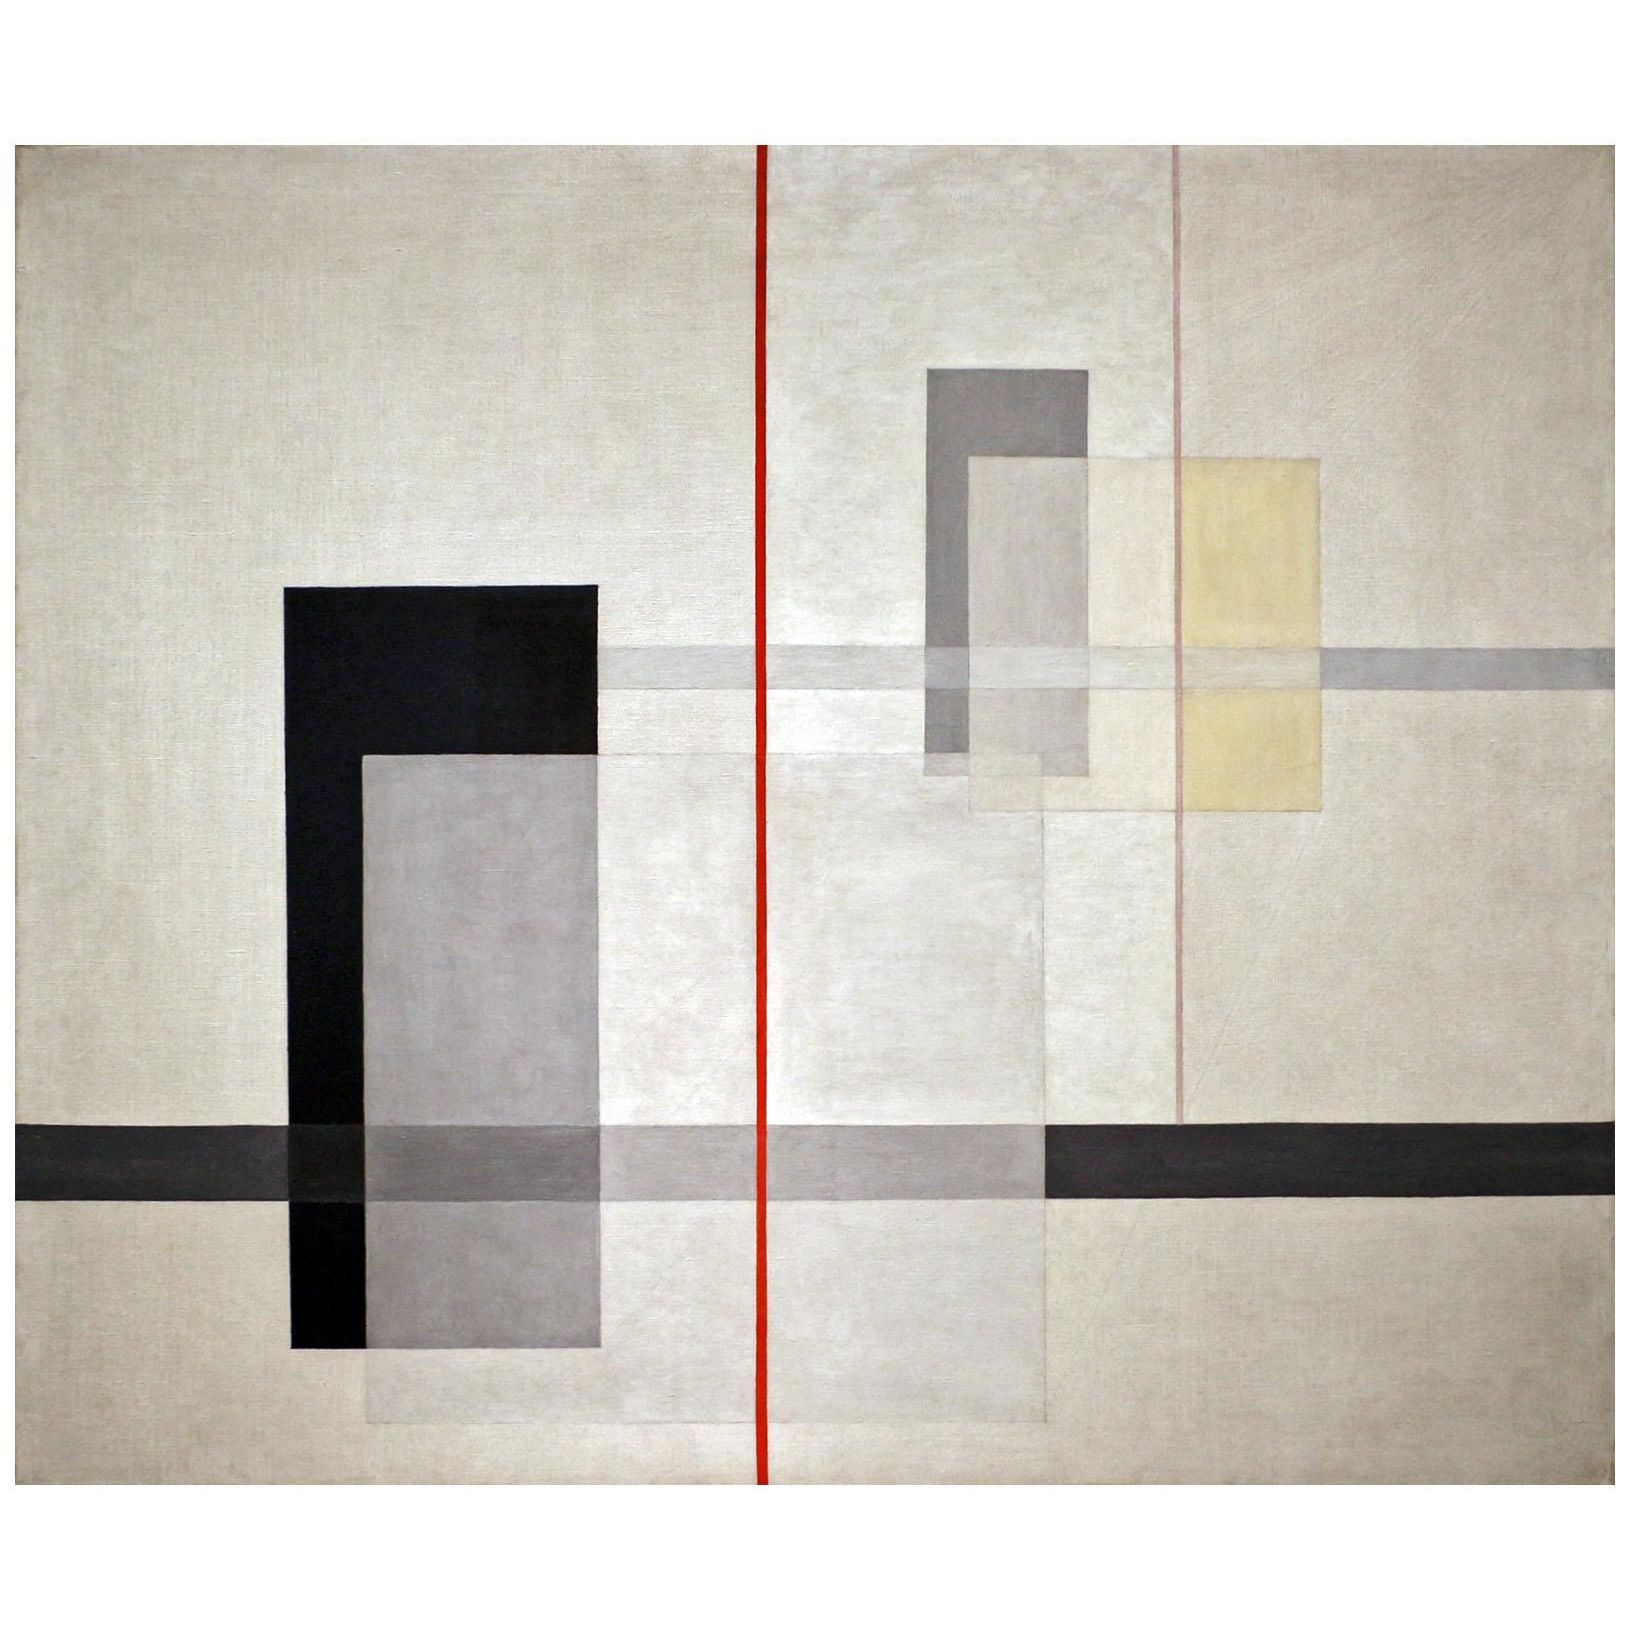 Laszlo Moholy-Nagy. K VII. 1922. Tate Modern